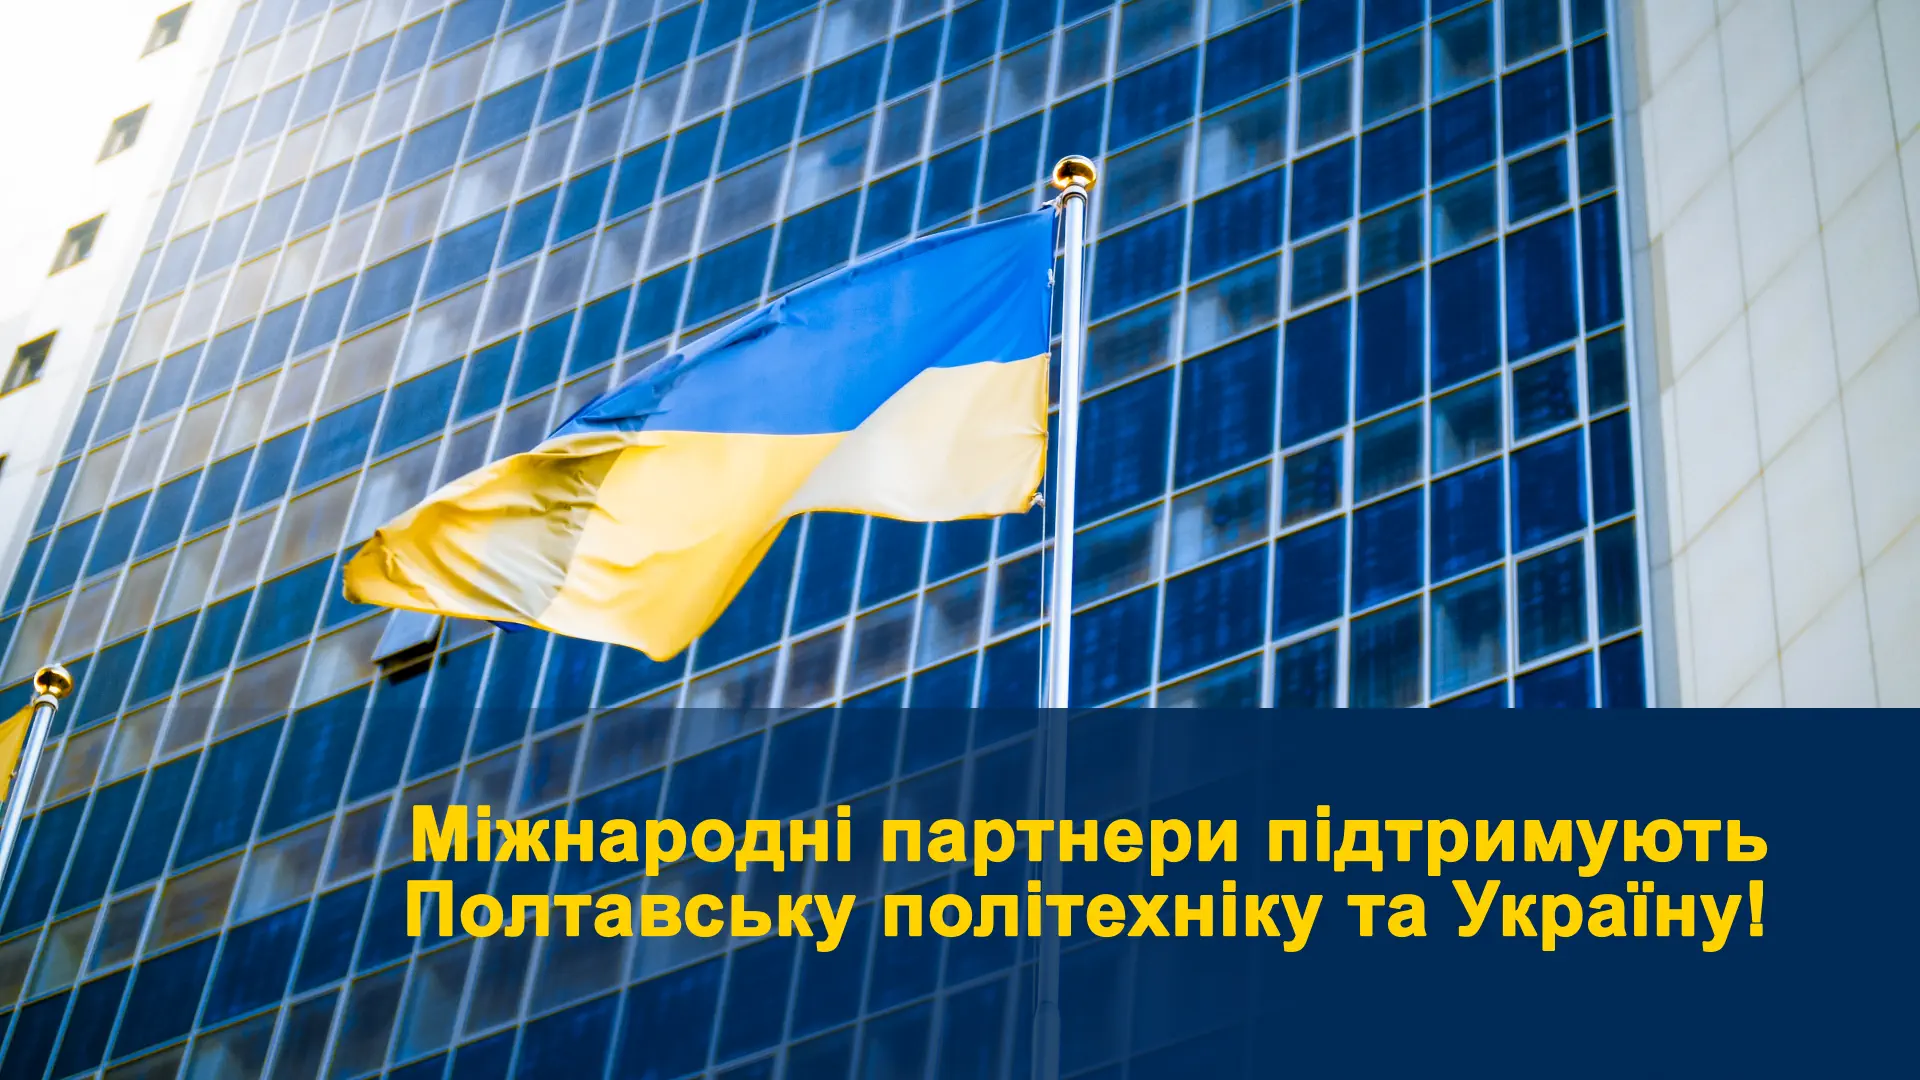 International partners support Poltava Polytechnic and Ukraine